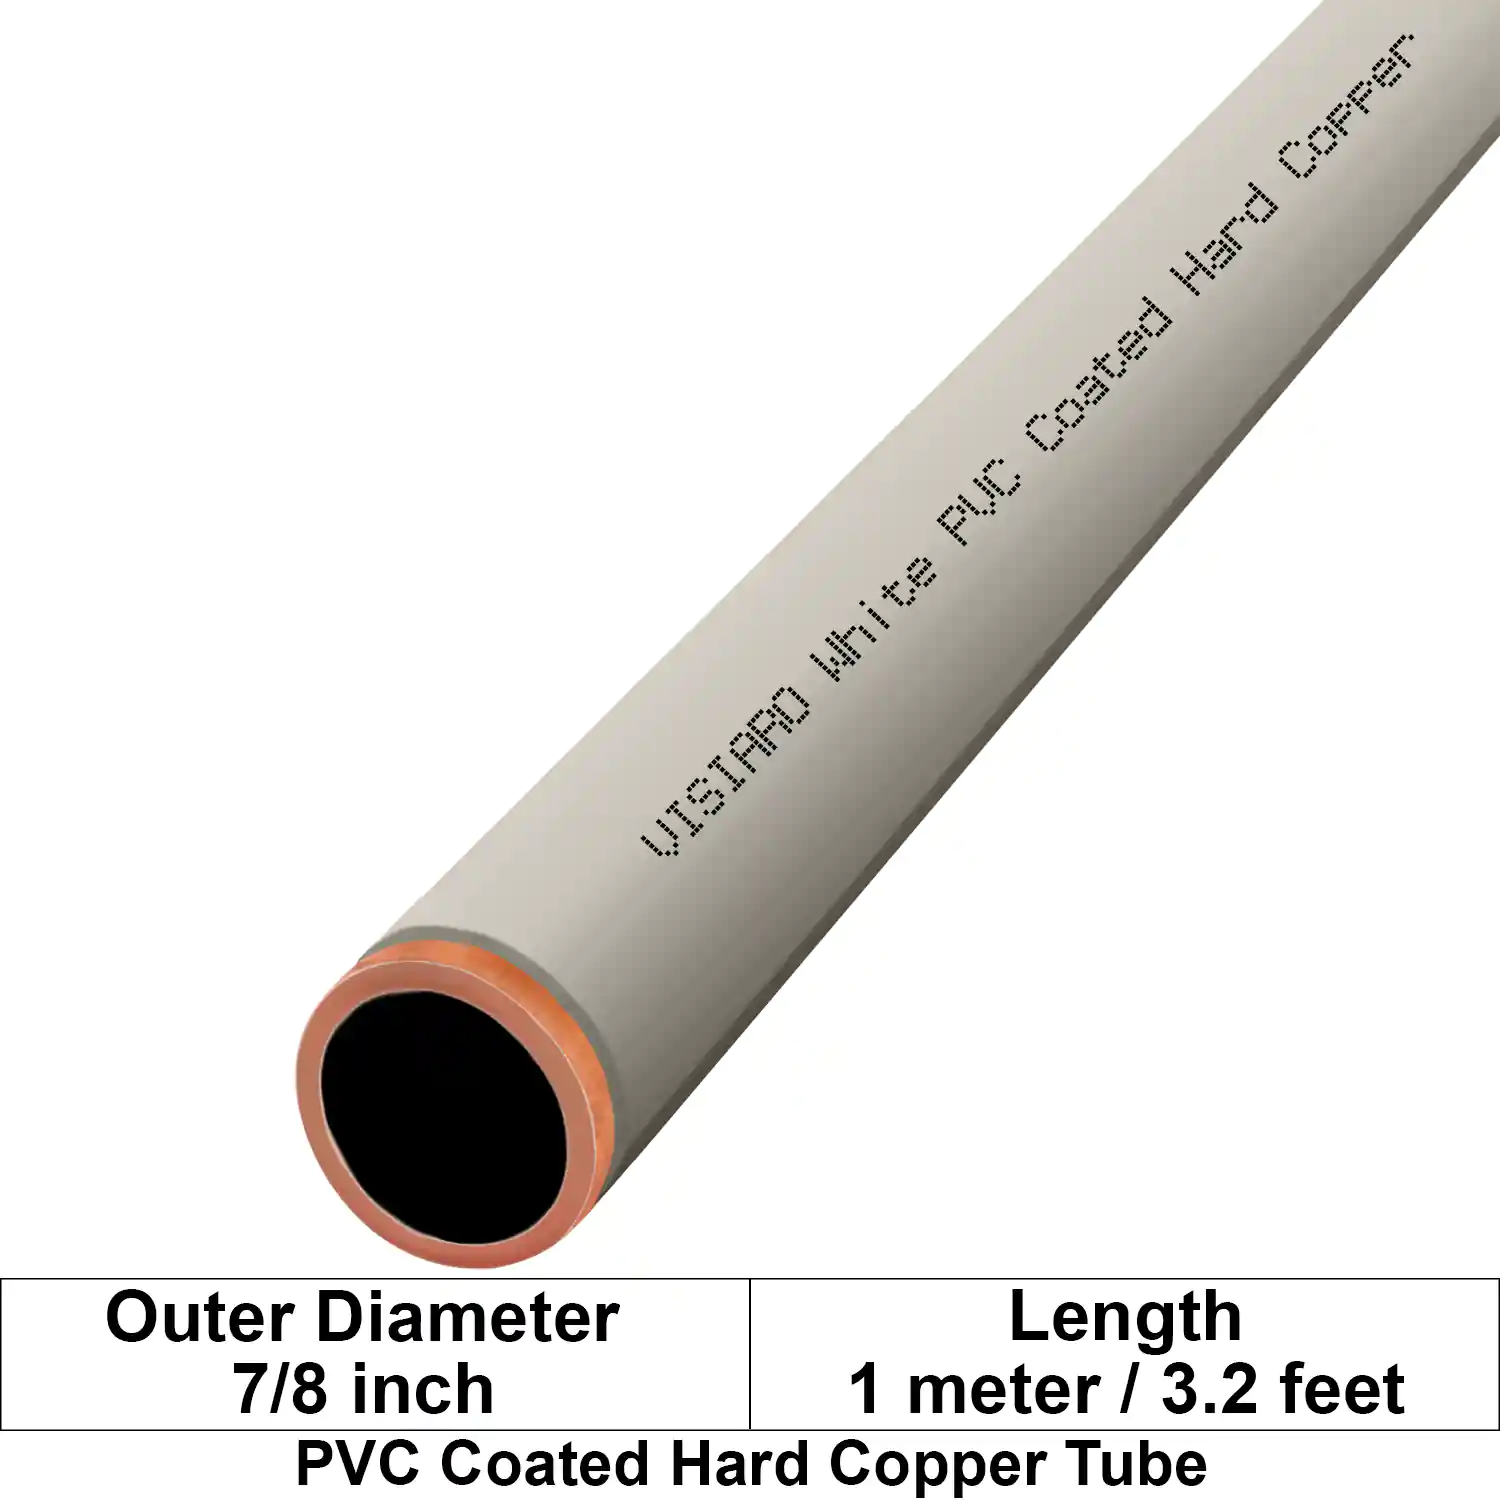 Visiaro White PVC Coated Hard Copper Tube 1mtr long Outer Diameter - 7/8 inch